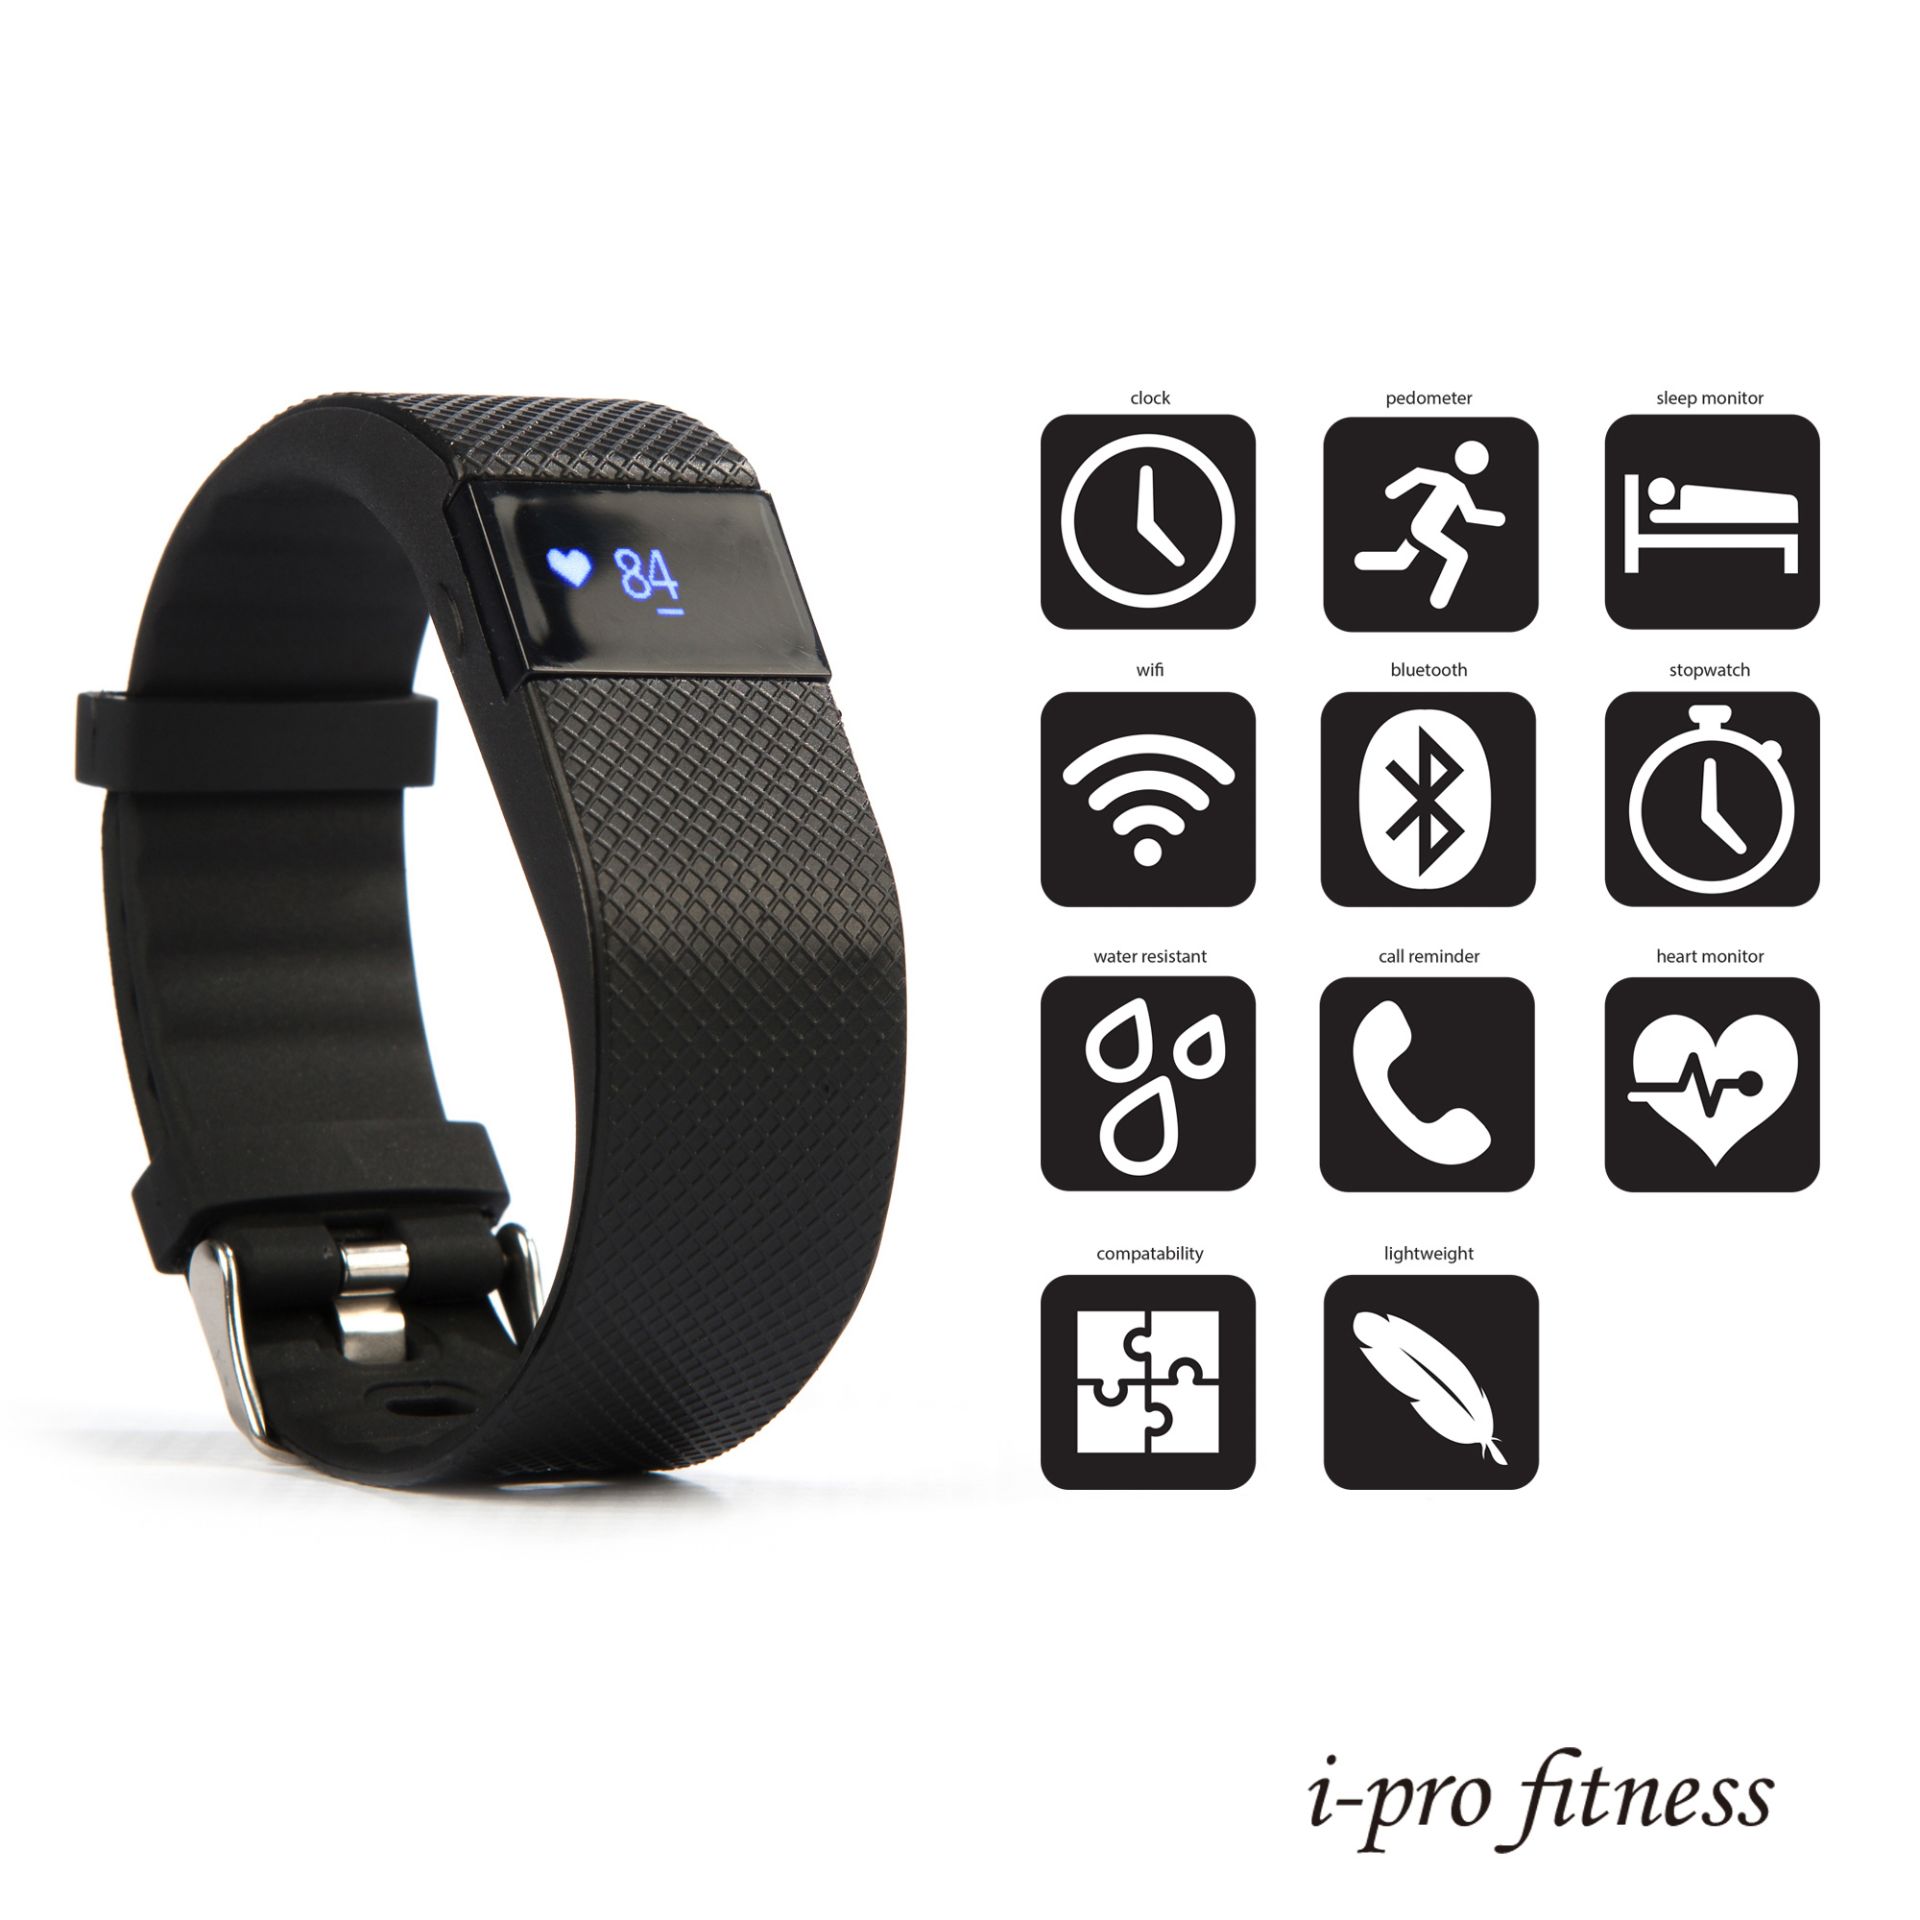 Fitness Tracker i-pro fitness, Bluetooth 4.0 Sports Smart Bracelet, Heart Rate Monitor & Pedometer. - Image 3 of 8